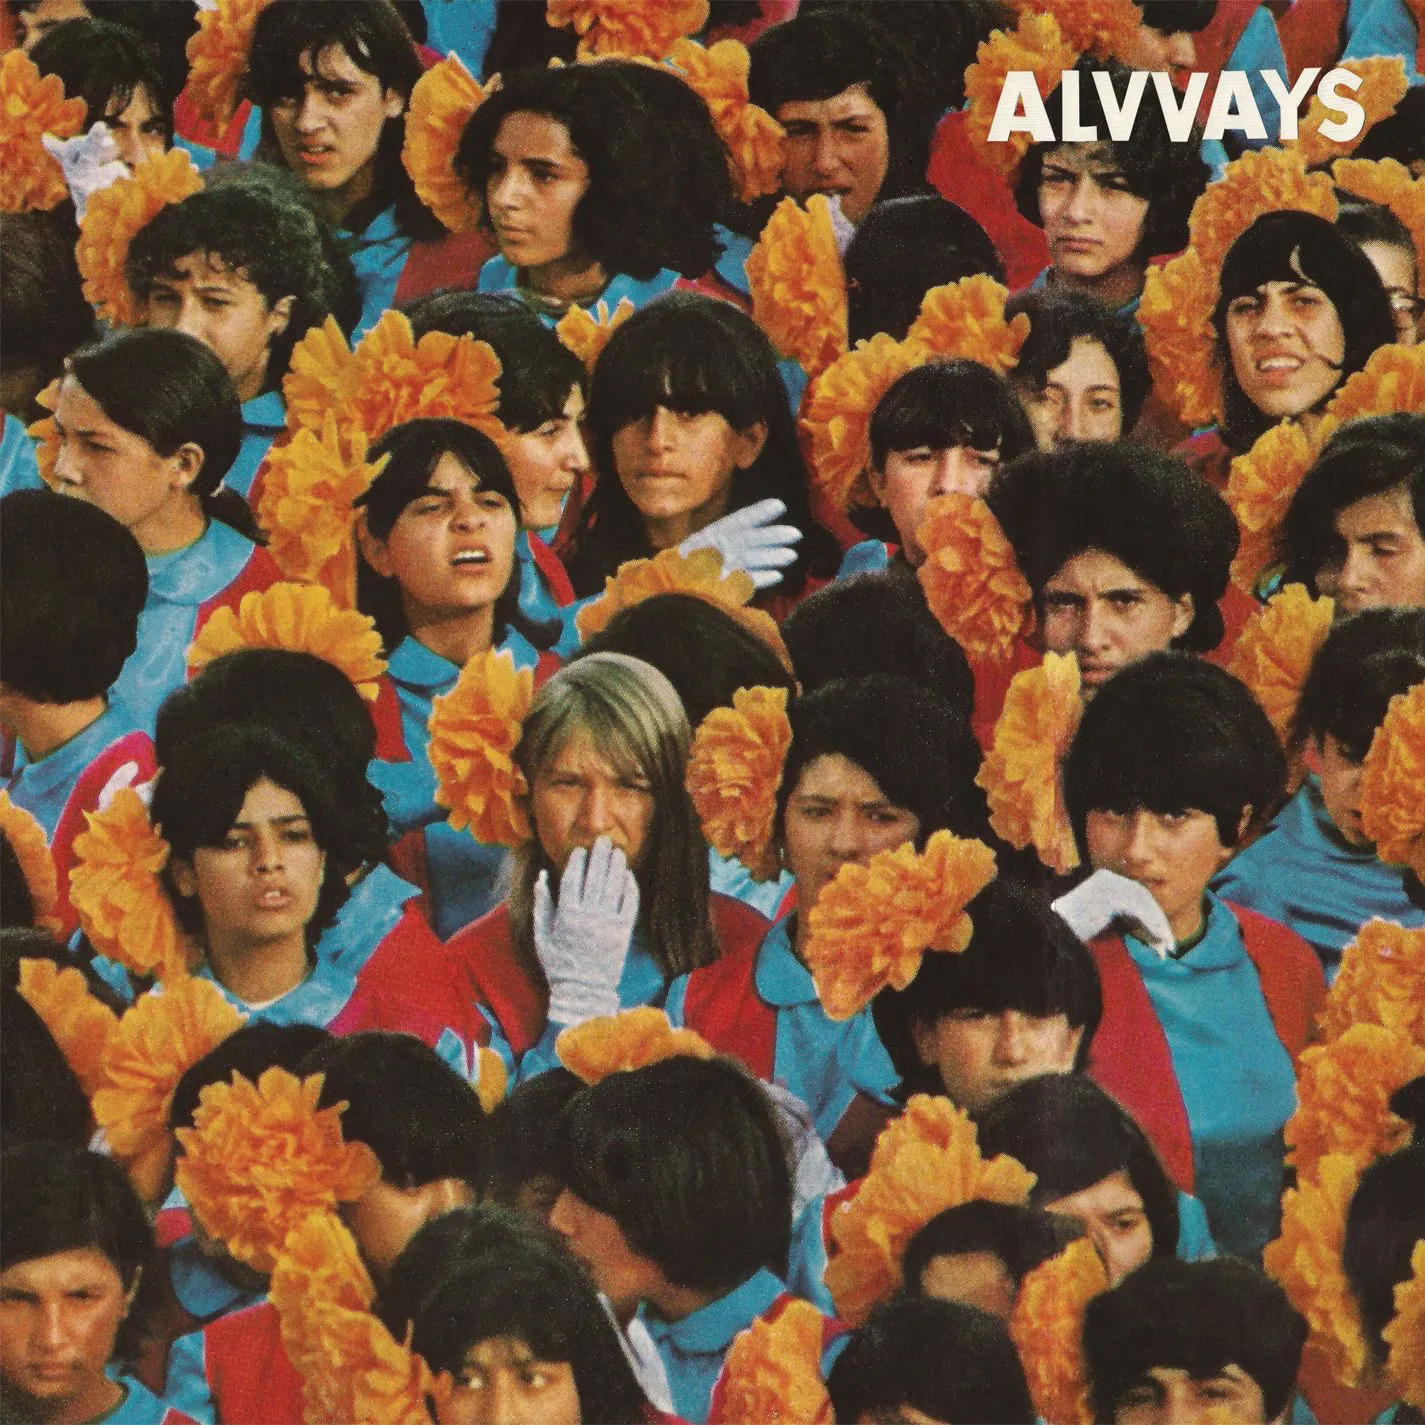 Buy Alvvays via Rough Trade